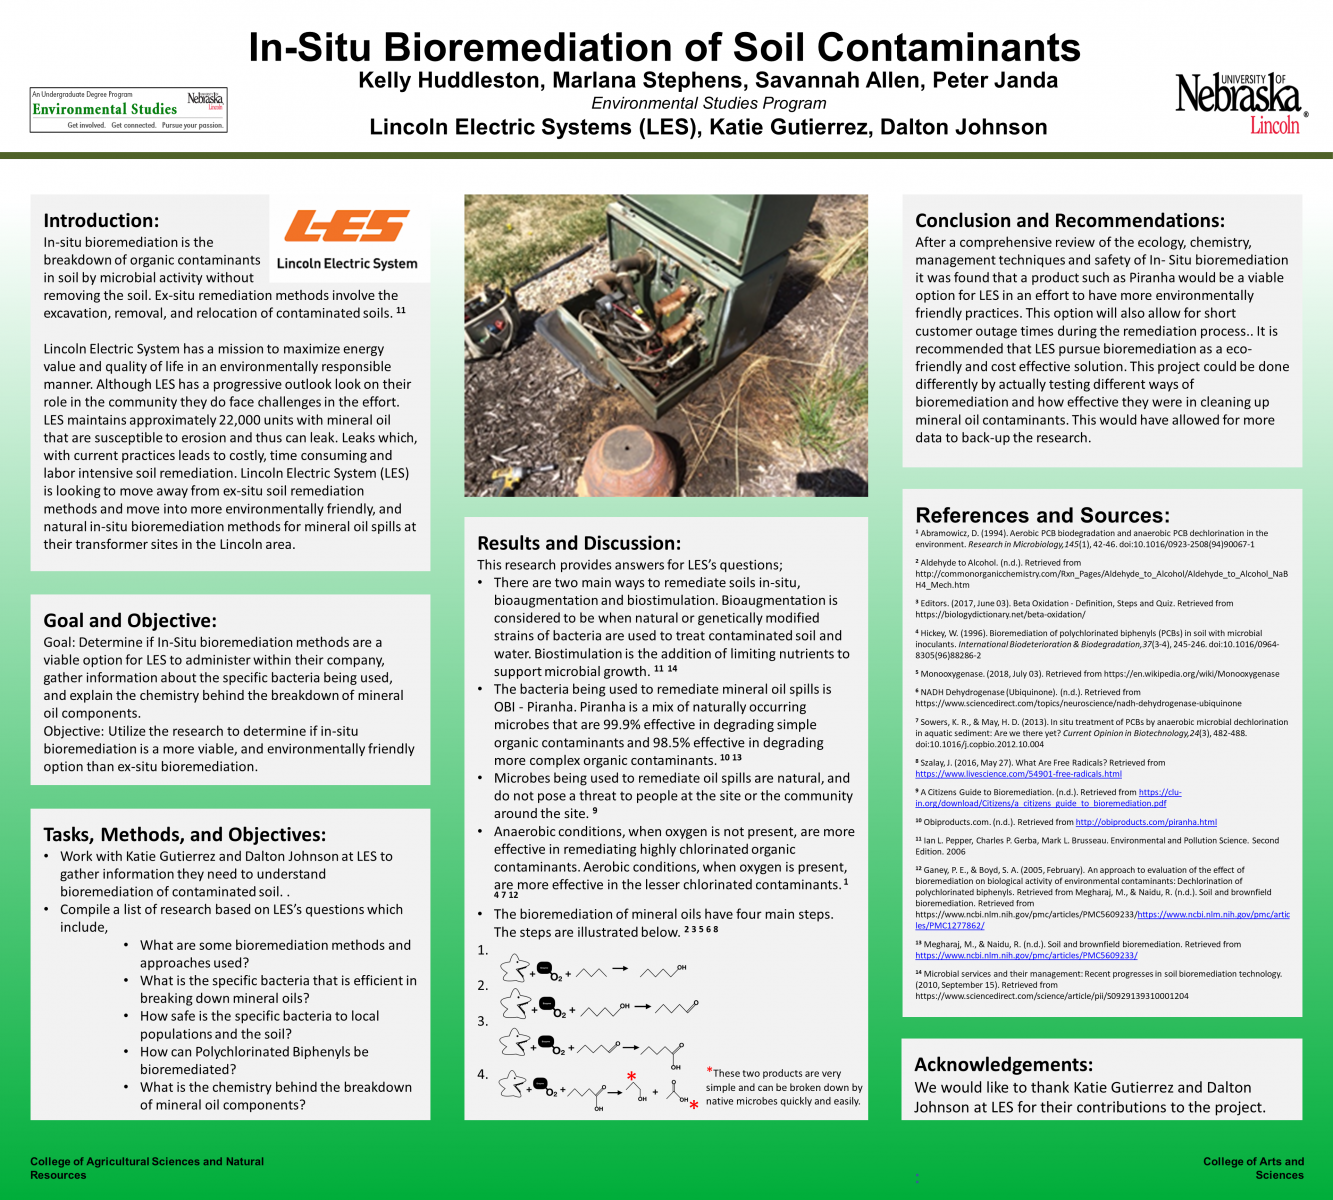 In-Situ Remediation of Soil Contaminants